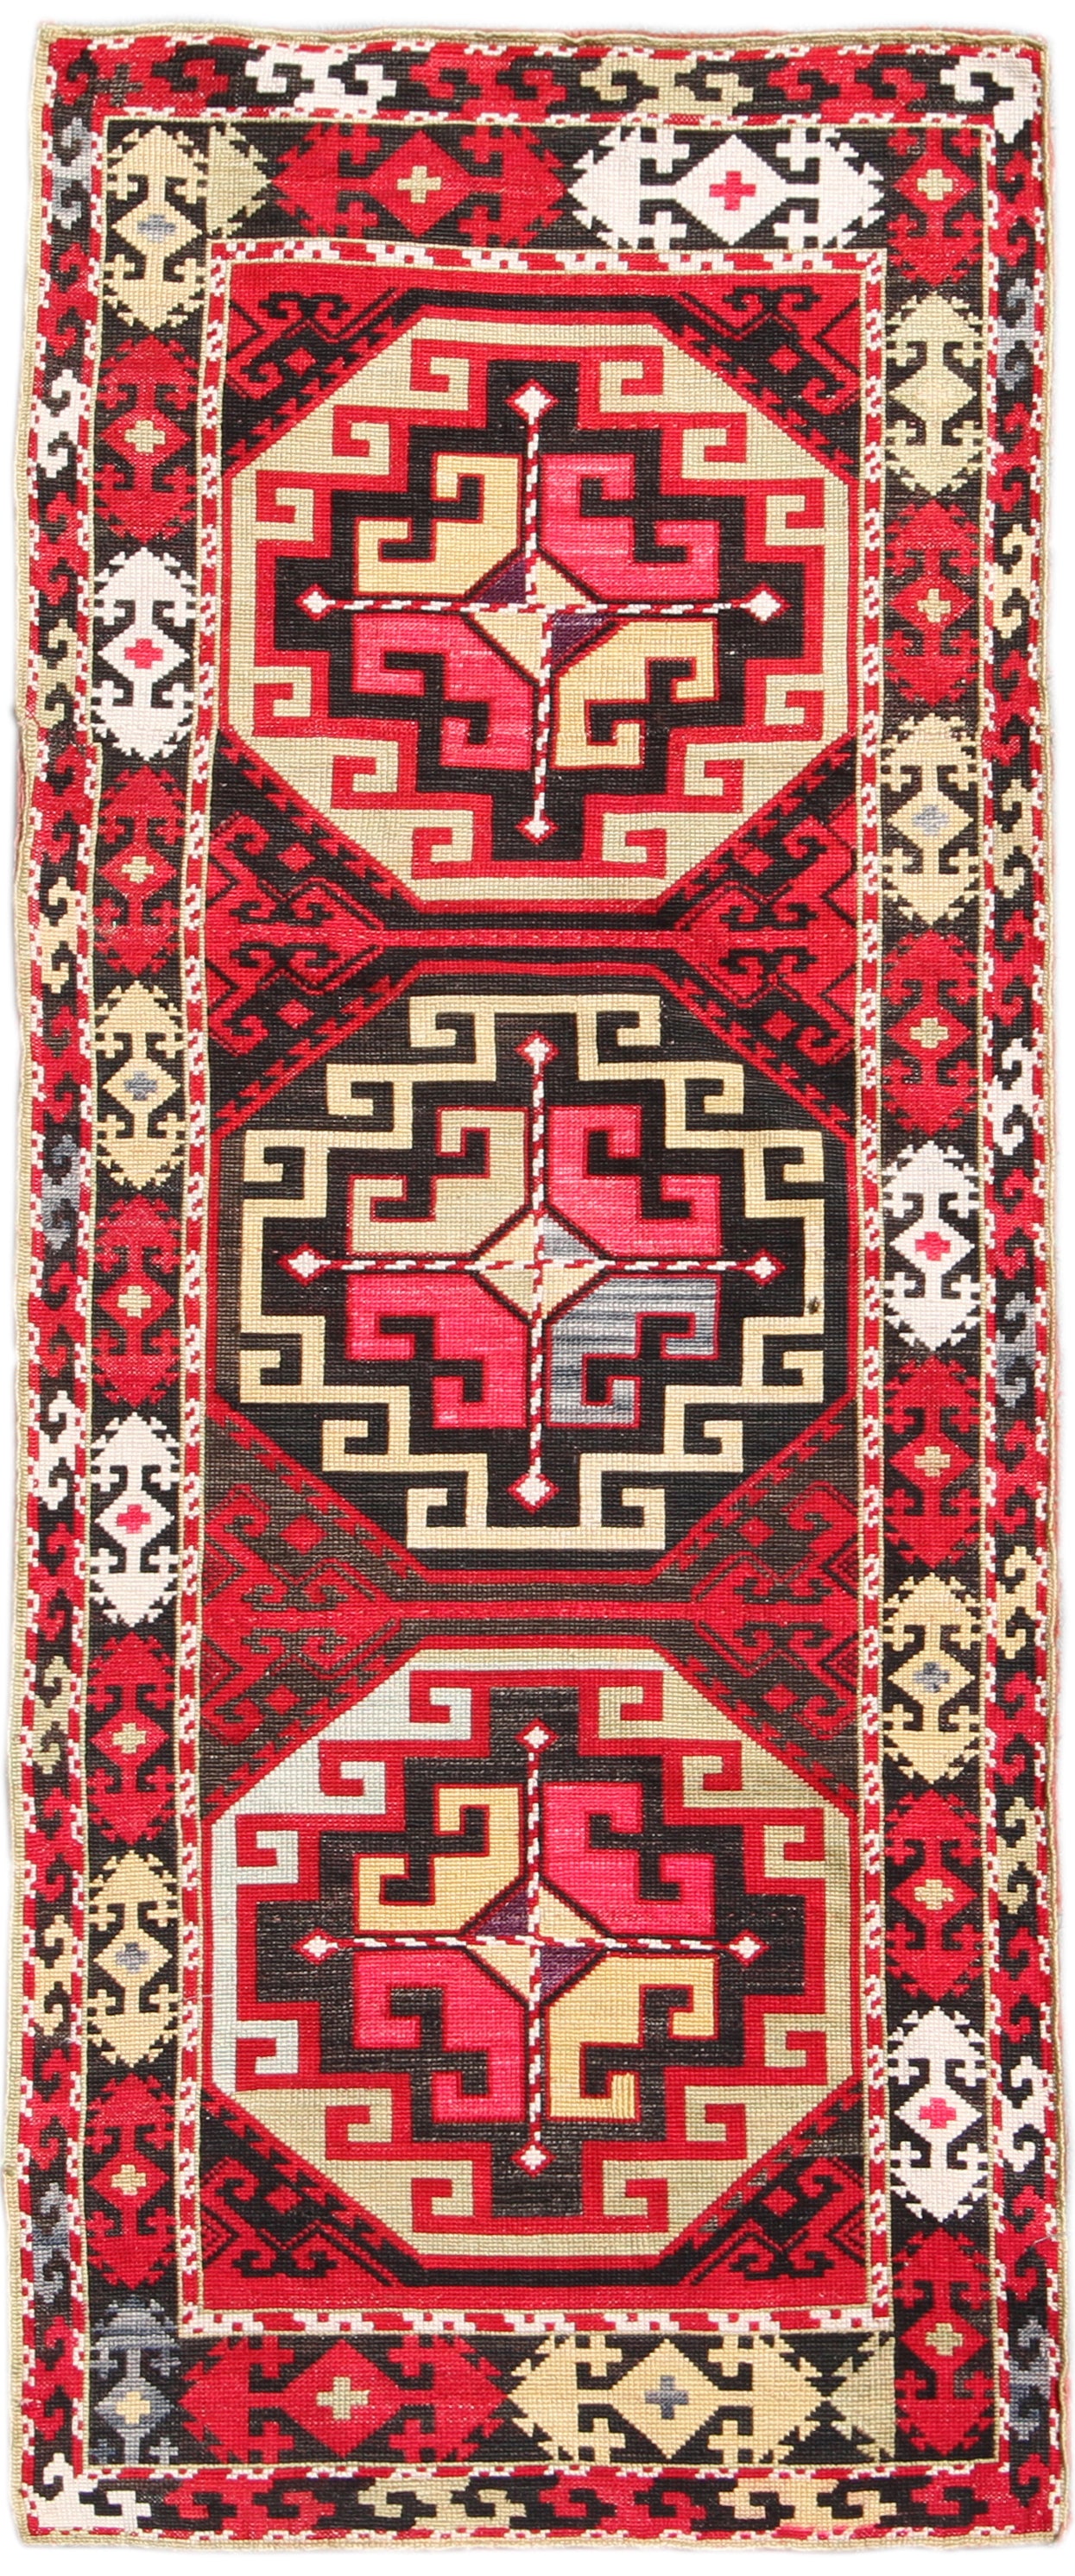 2'x5' Uzbek Needlepoint Suzani Textile